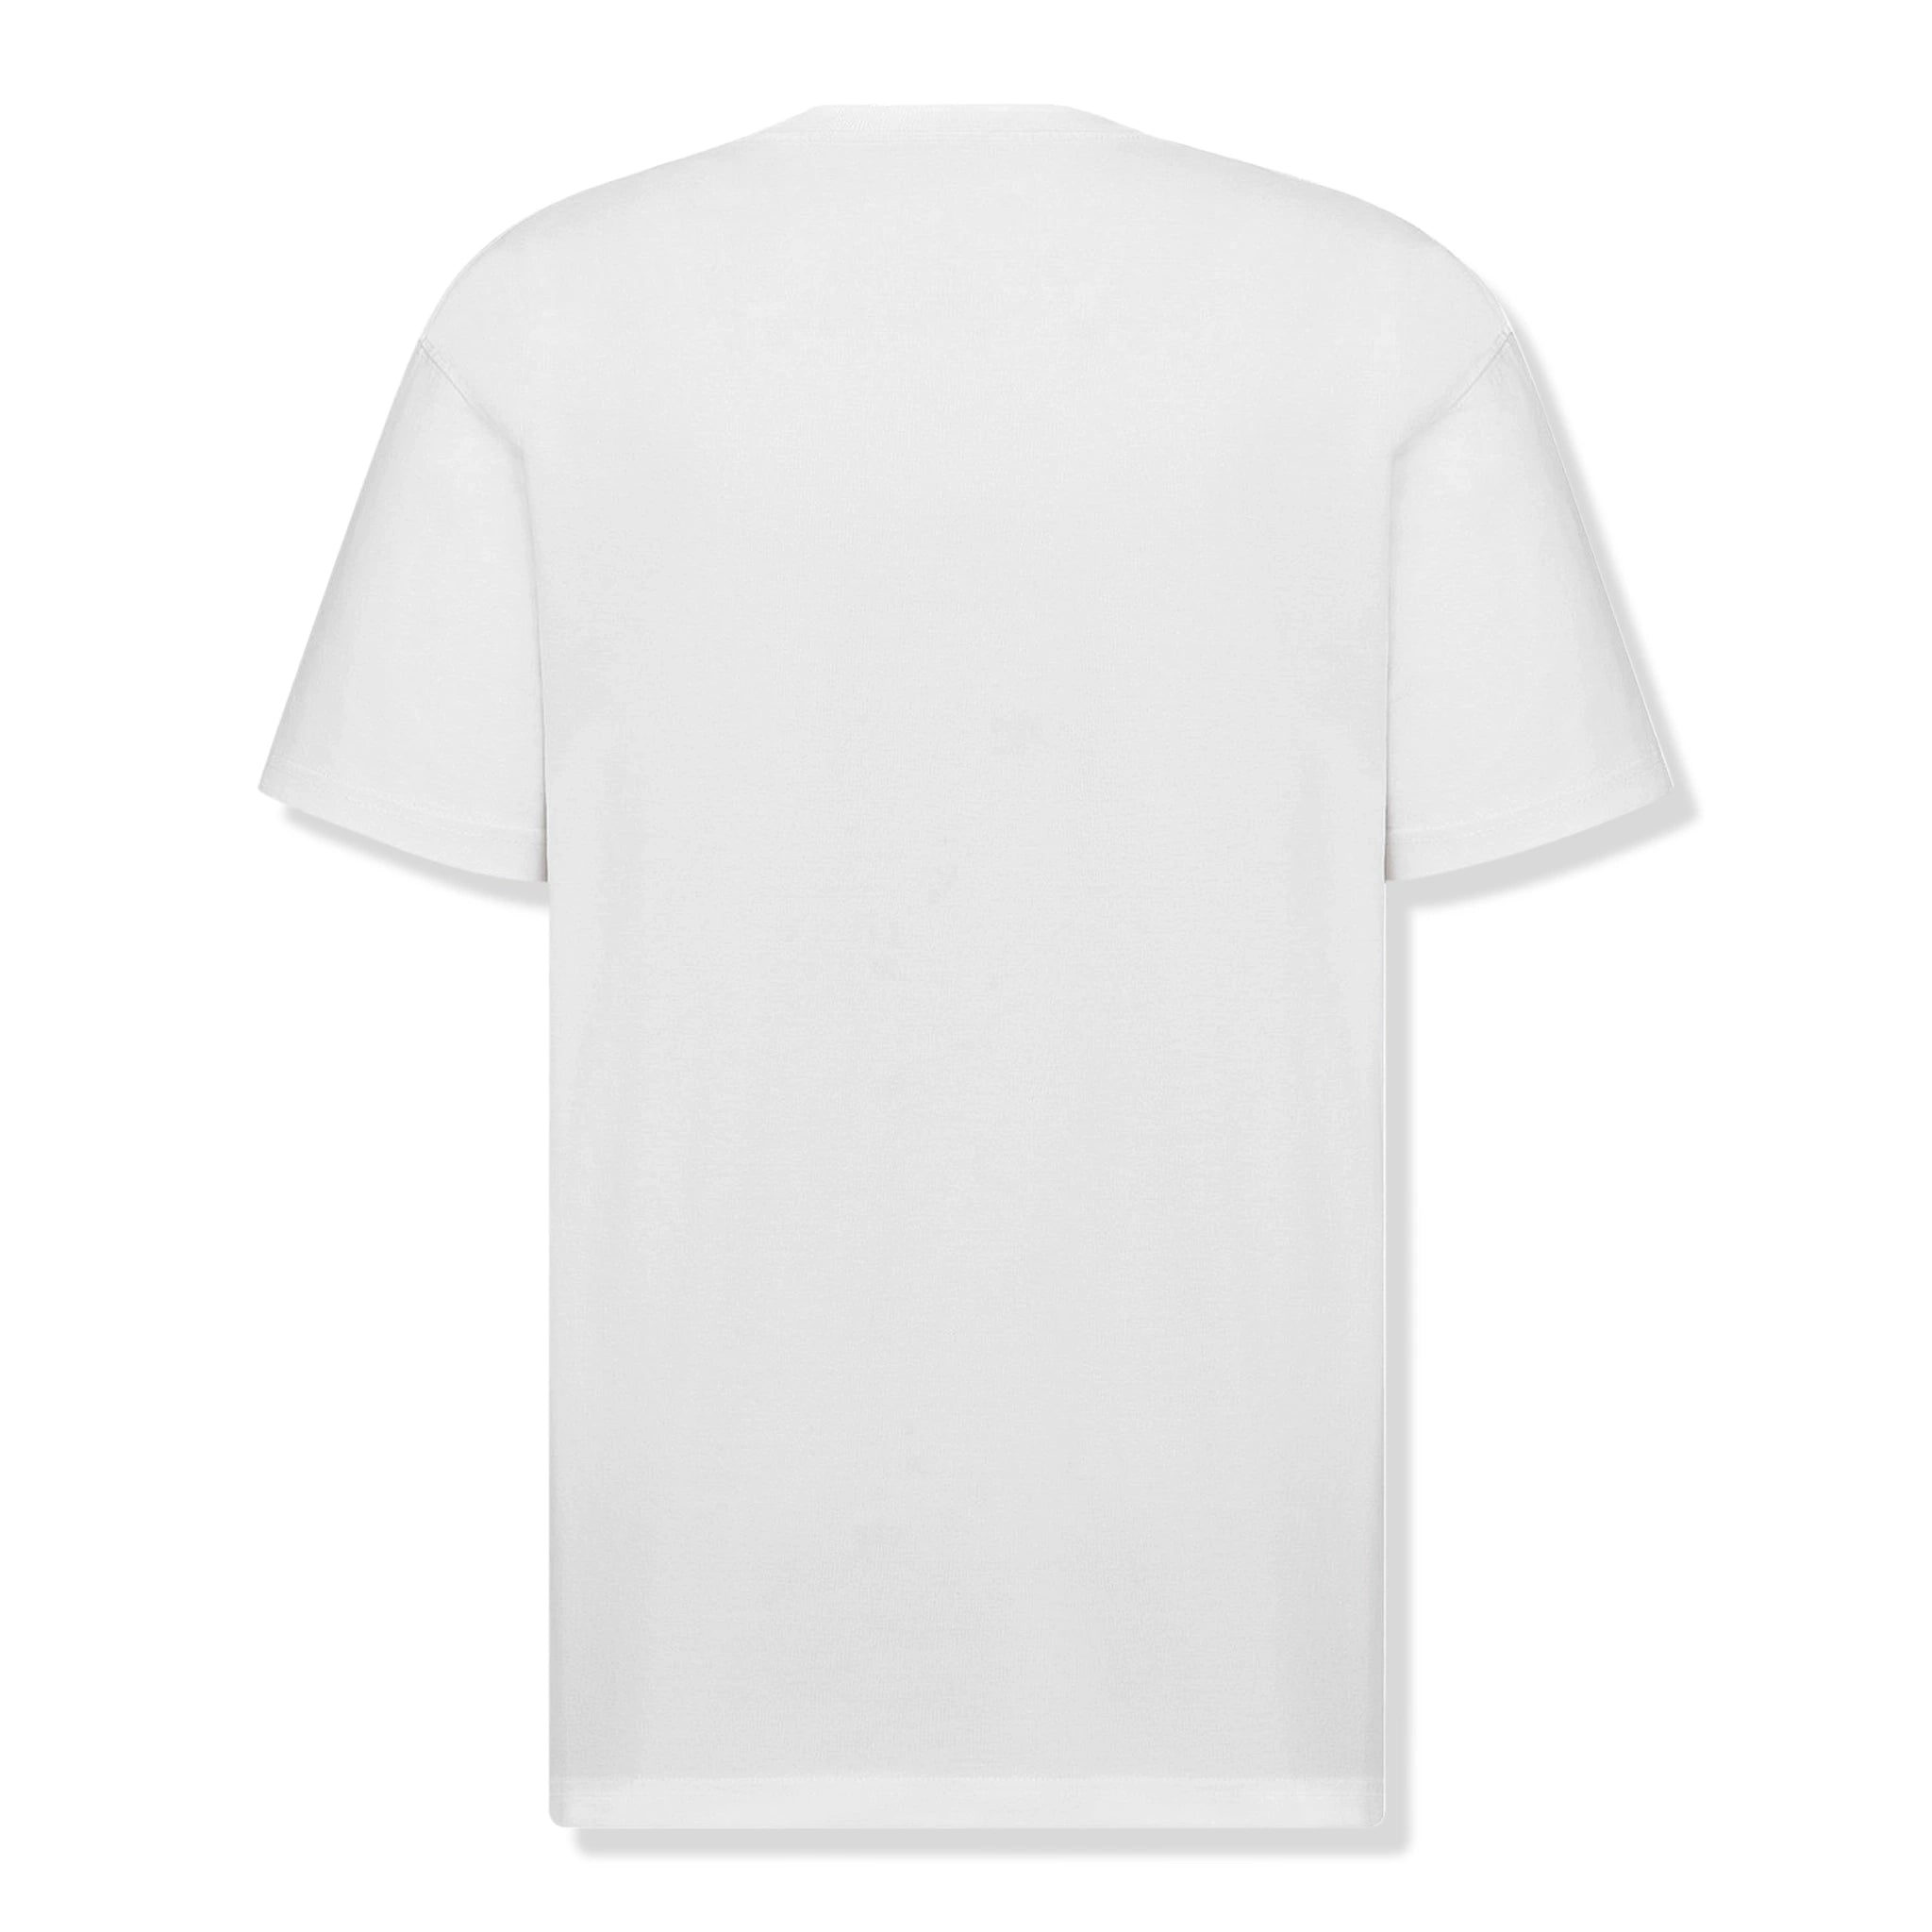 Back view of Dior x Cactus Jack Oversized White T Shirt 283J685C0554_C083